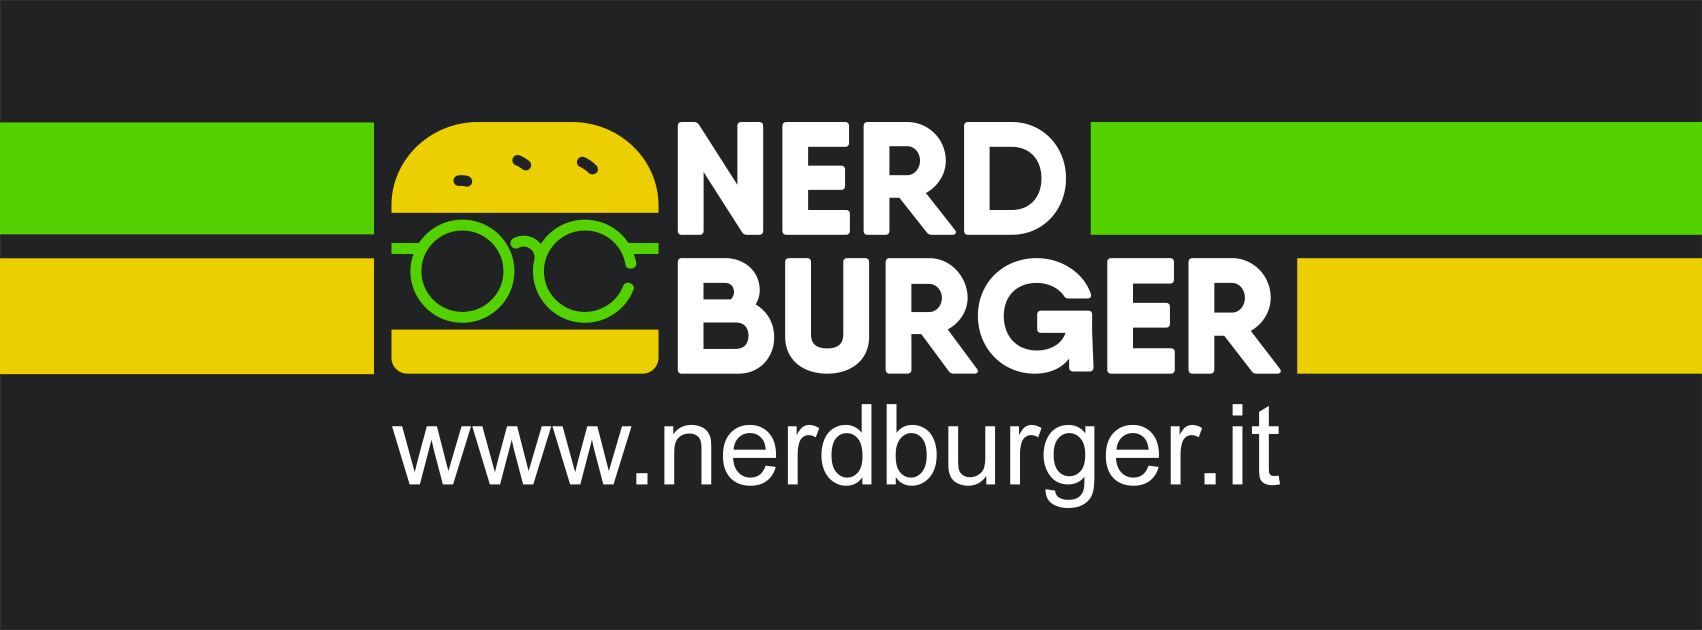 (c) Nerdburger.it